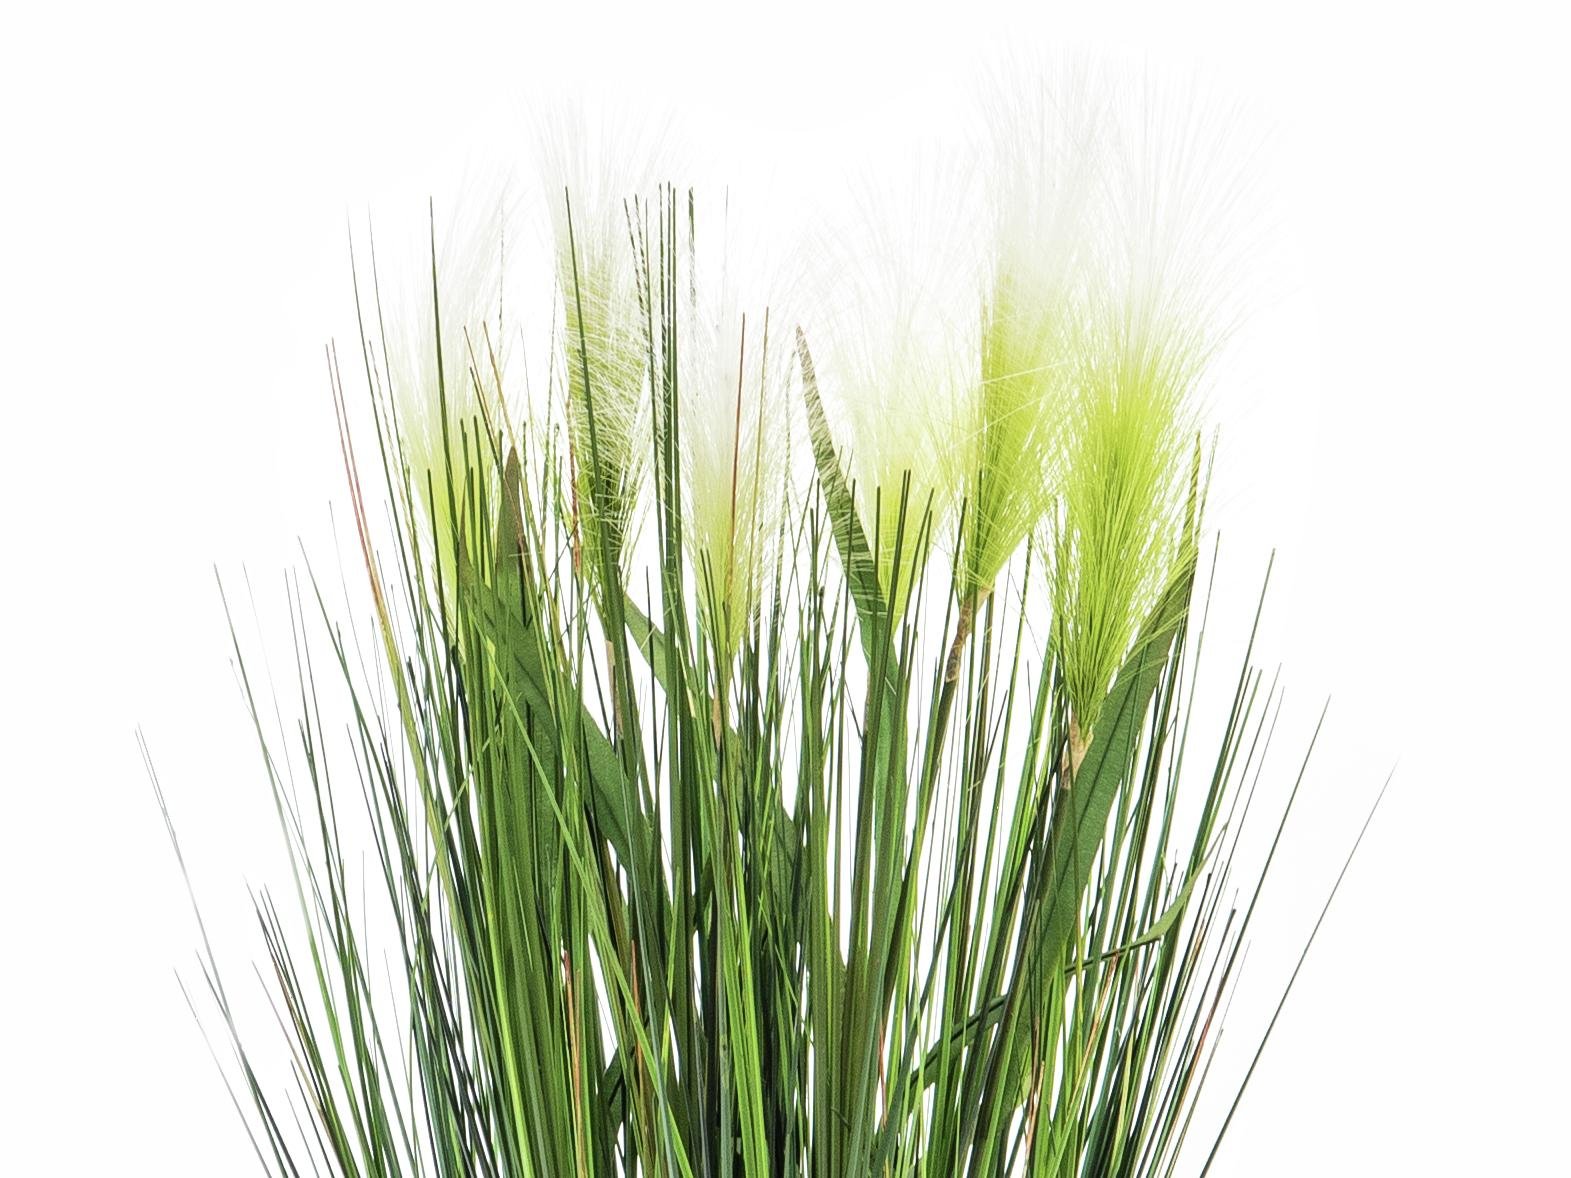 EUROPALMS Feather grass, artificial, white, 60cm